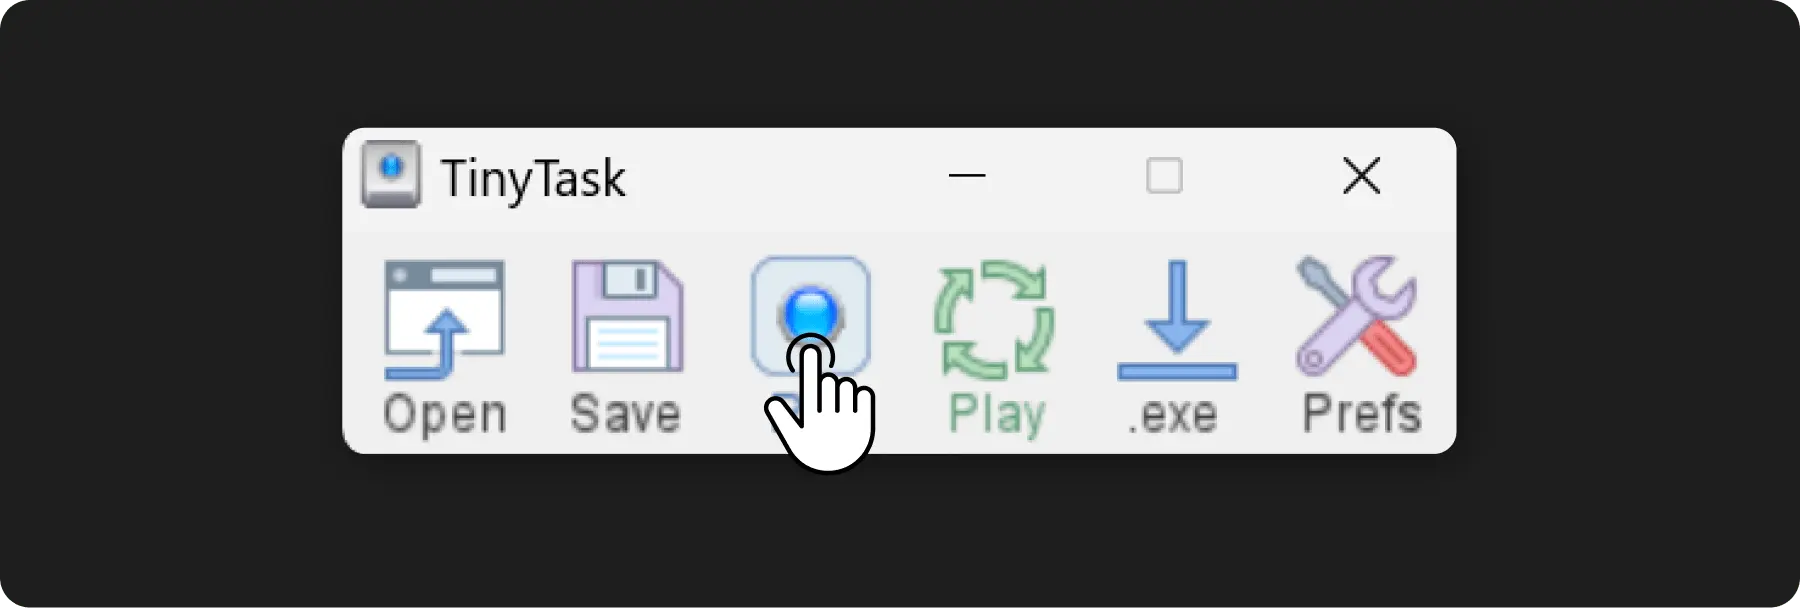 Tiny Task Record Button